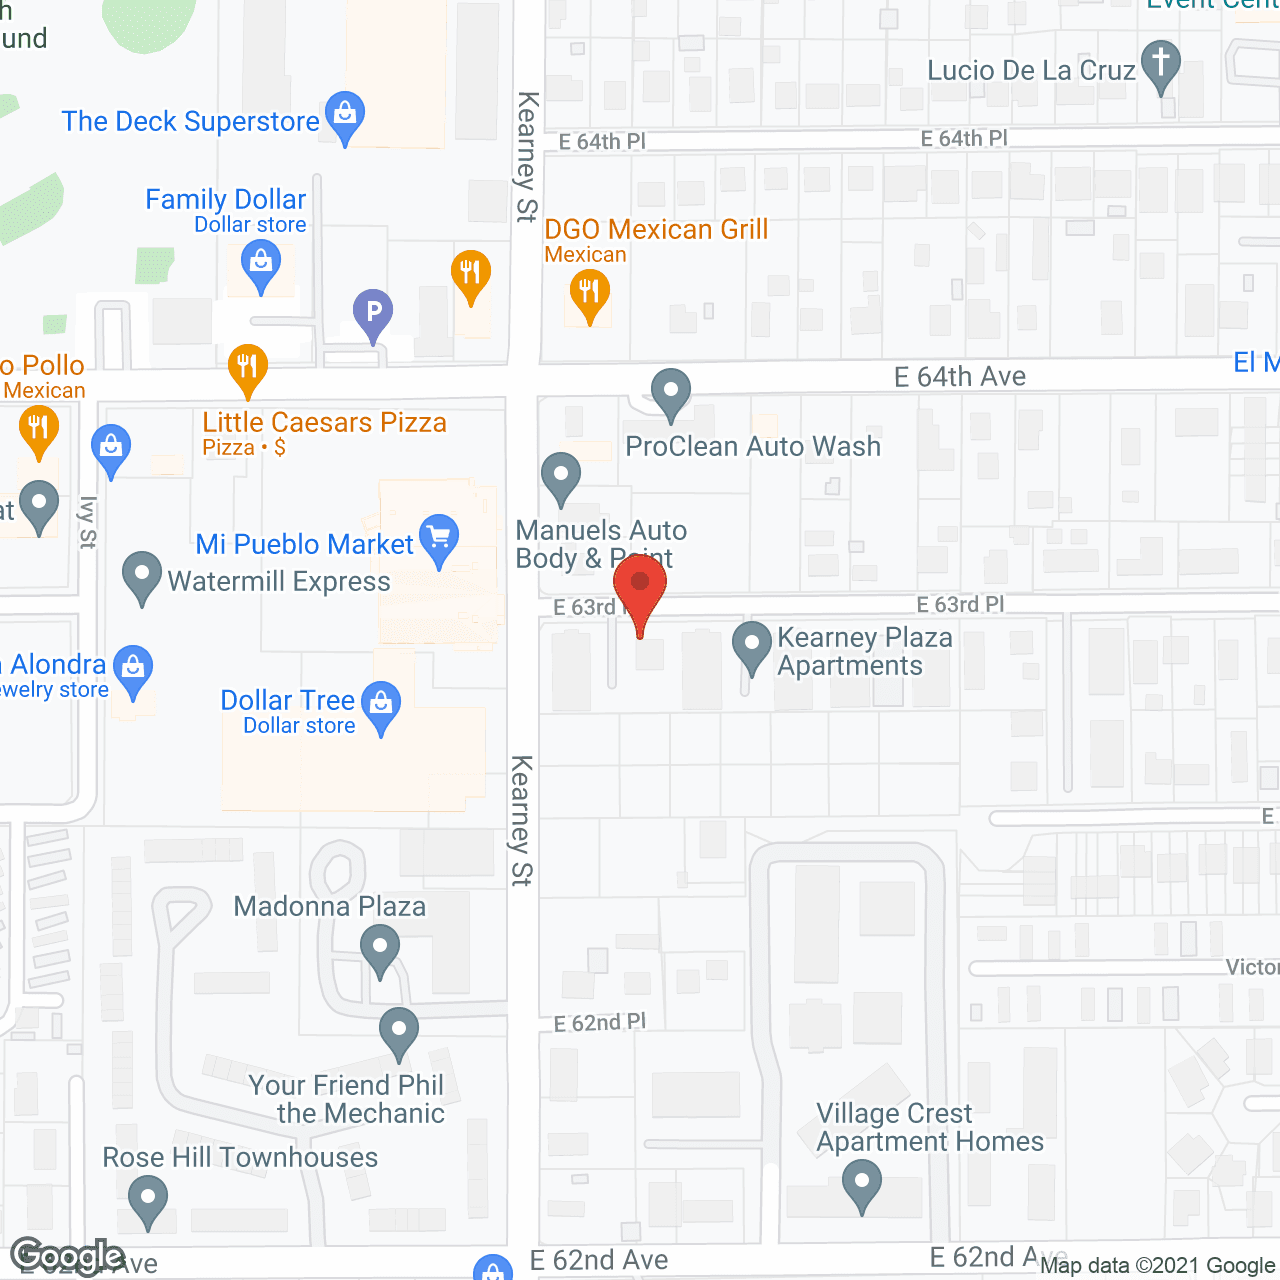 Kearney Plaza Apartments in google map